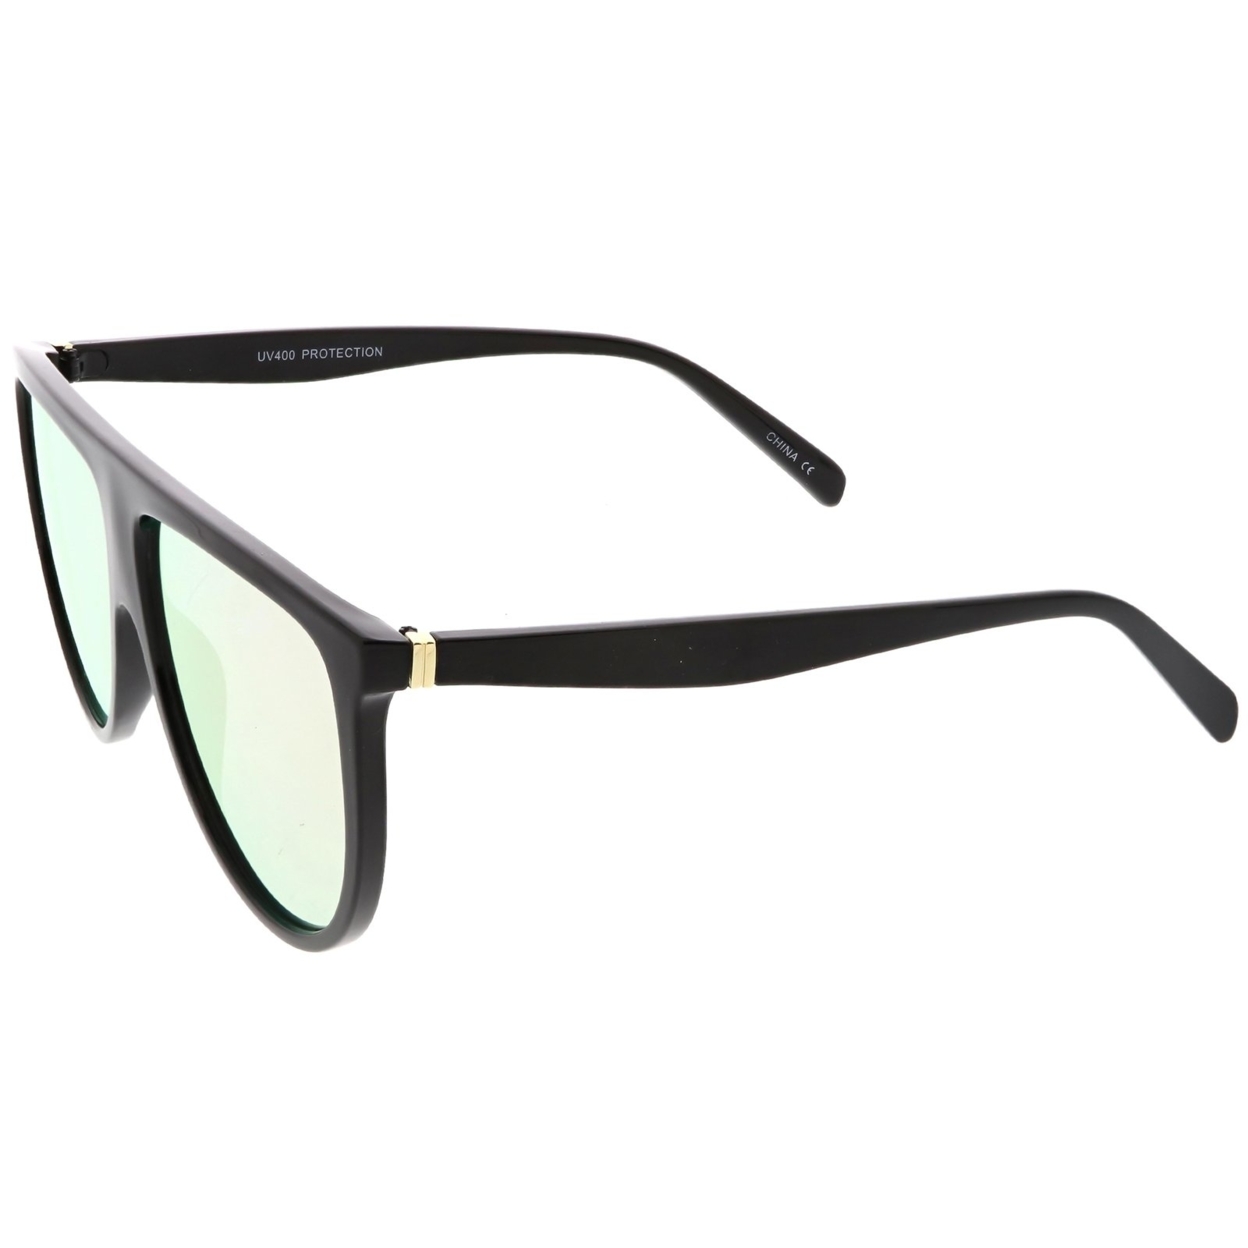 Oversize Modern Aviator Sunglasses Flat Top Color Mirrored Lens 59mm - Black / Blue Mirror